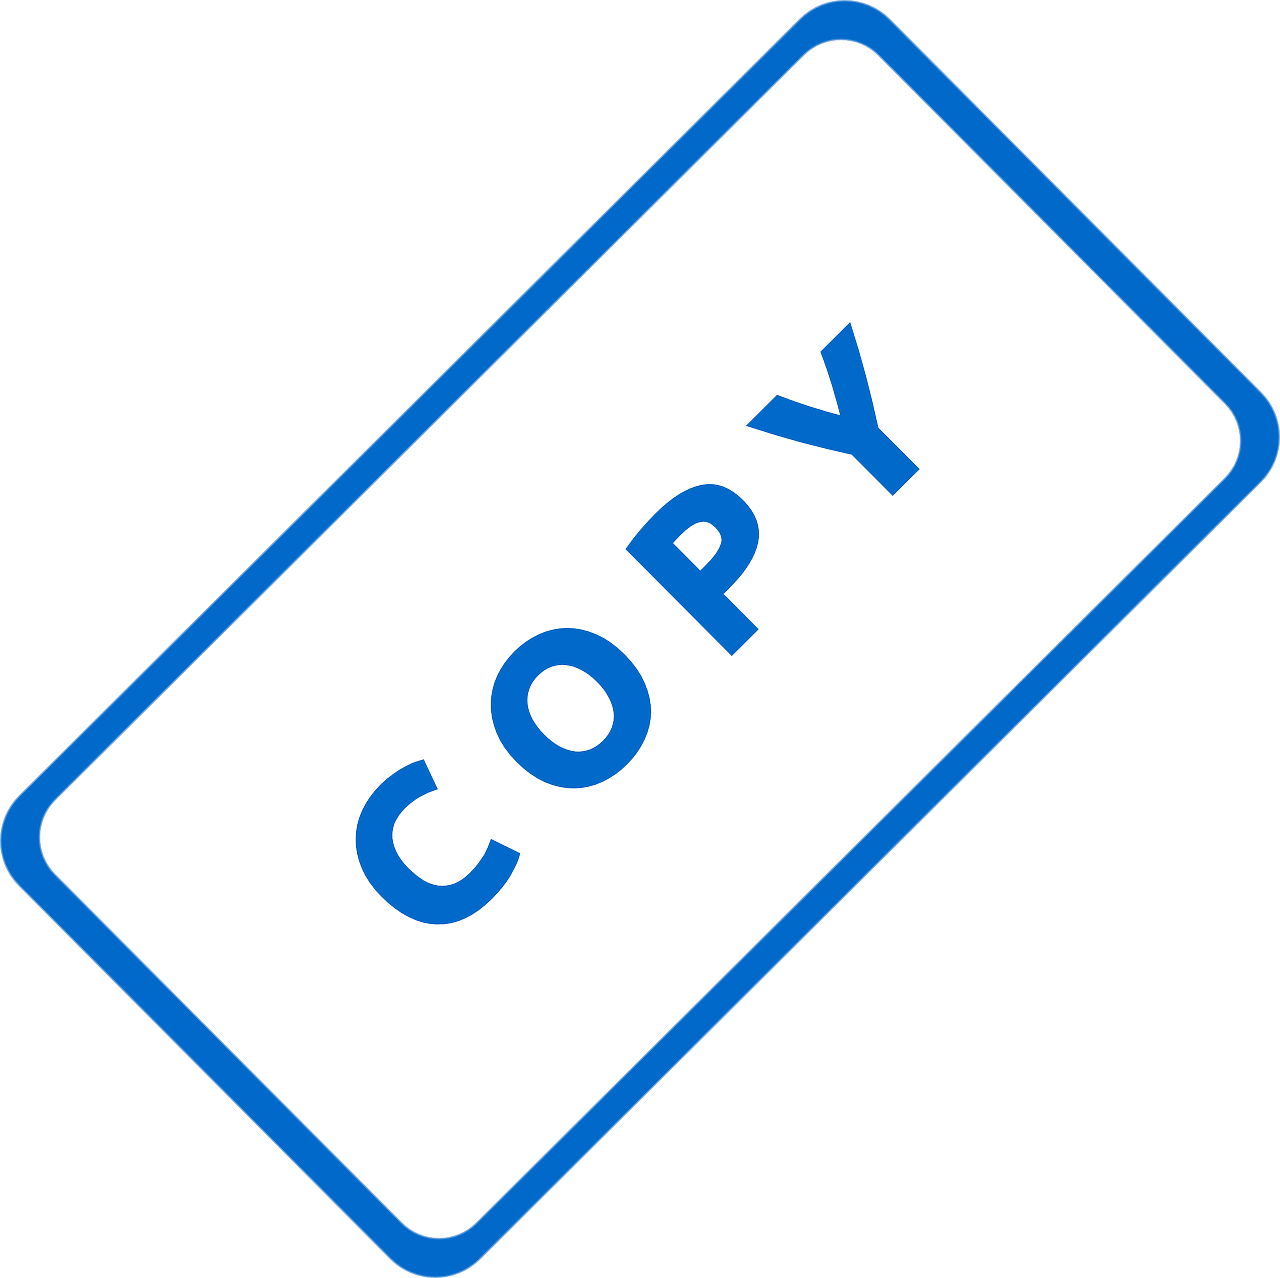 copy business document free photo